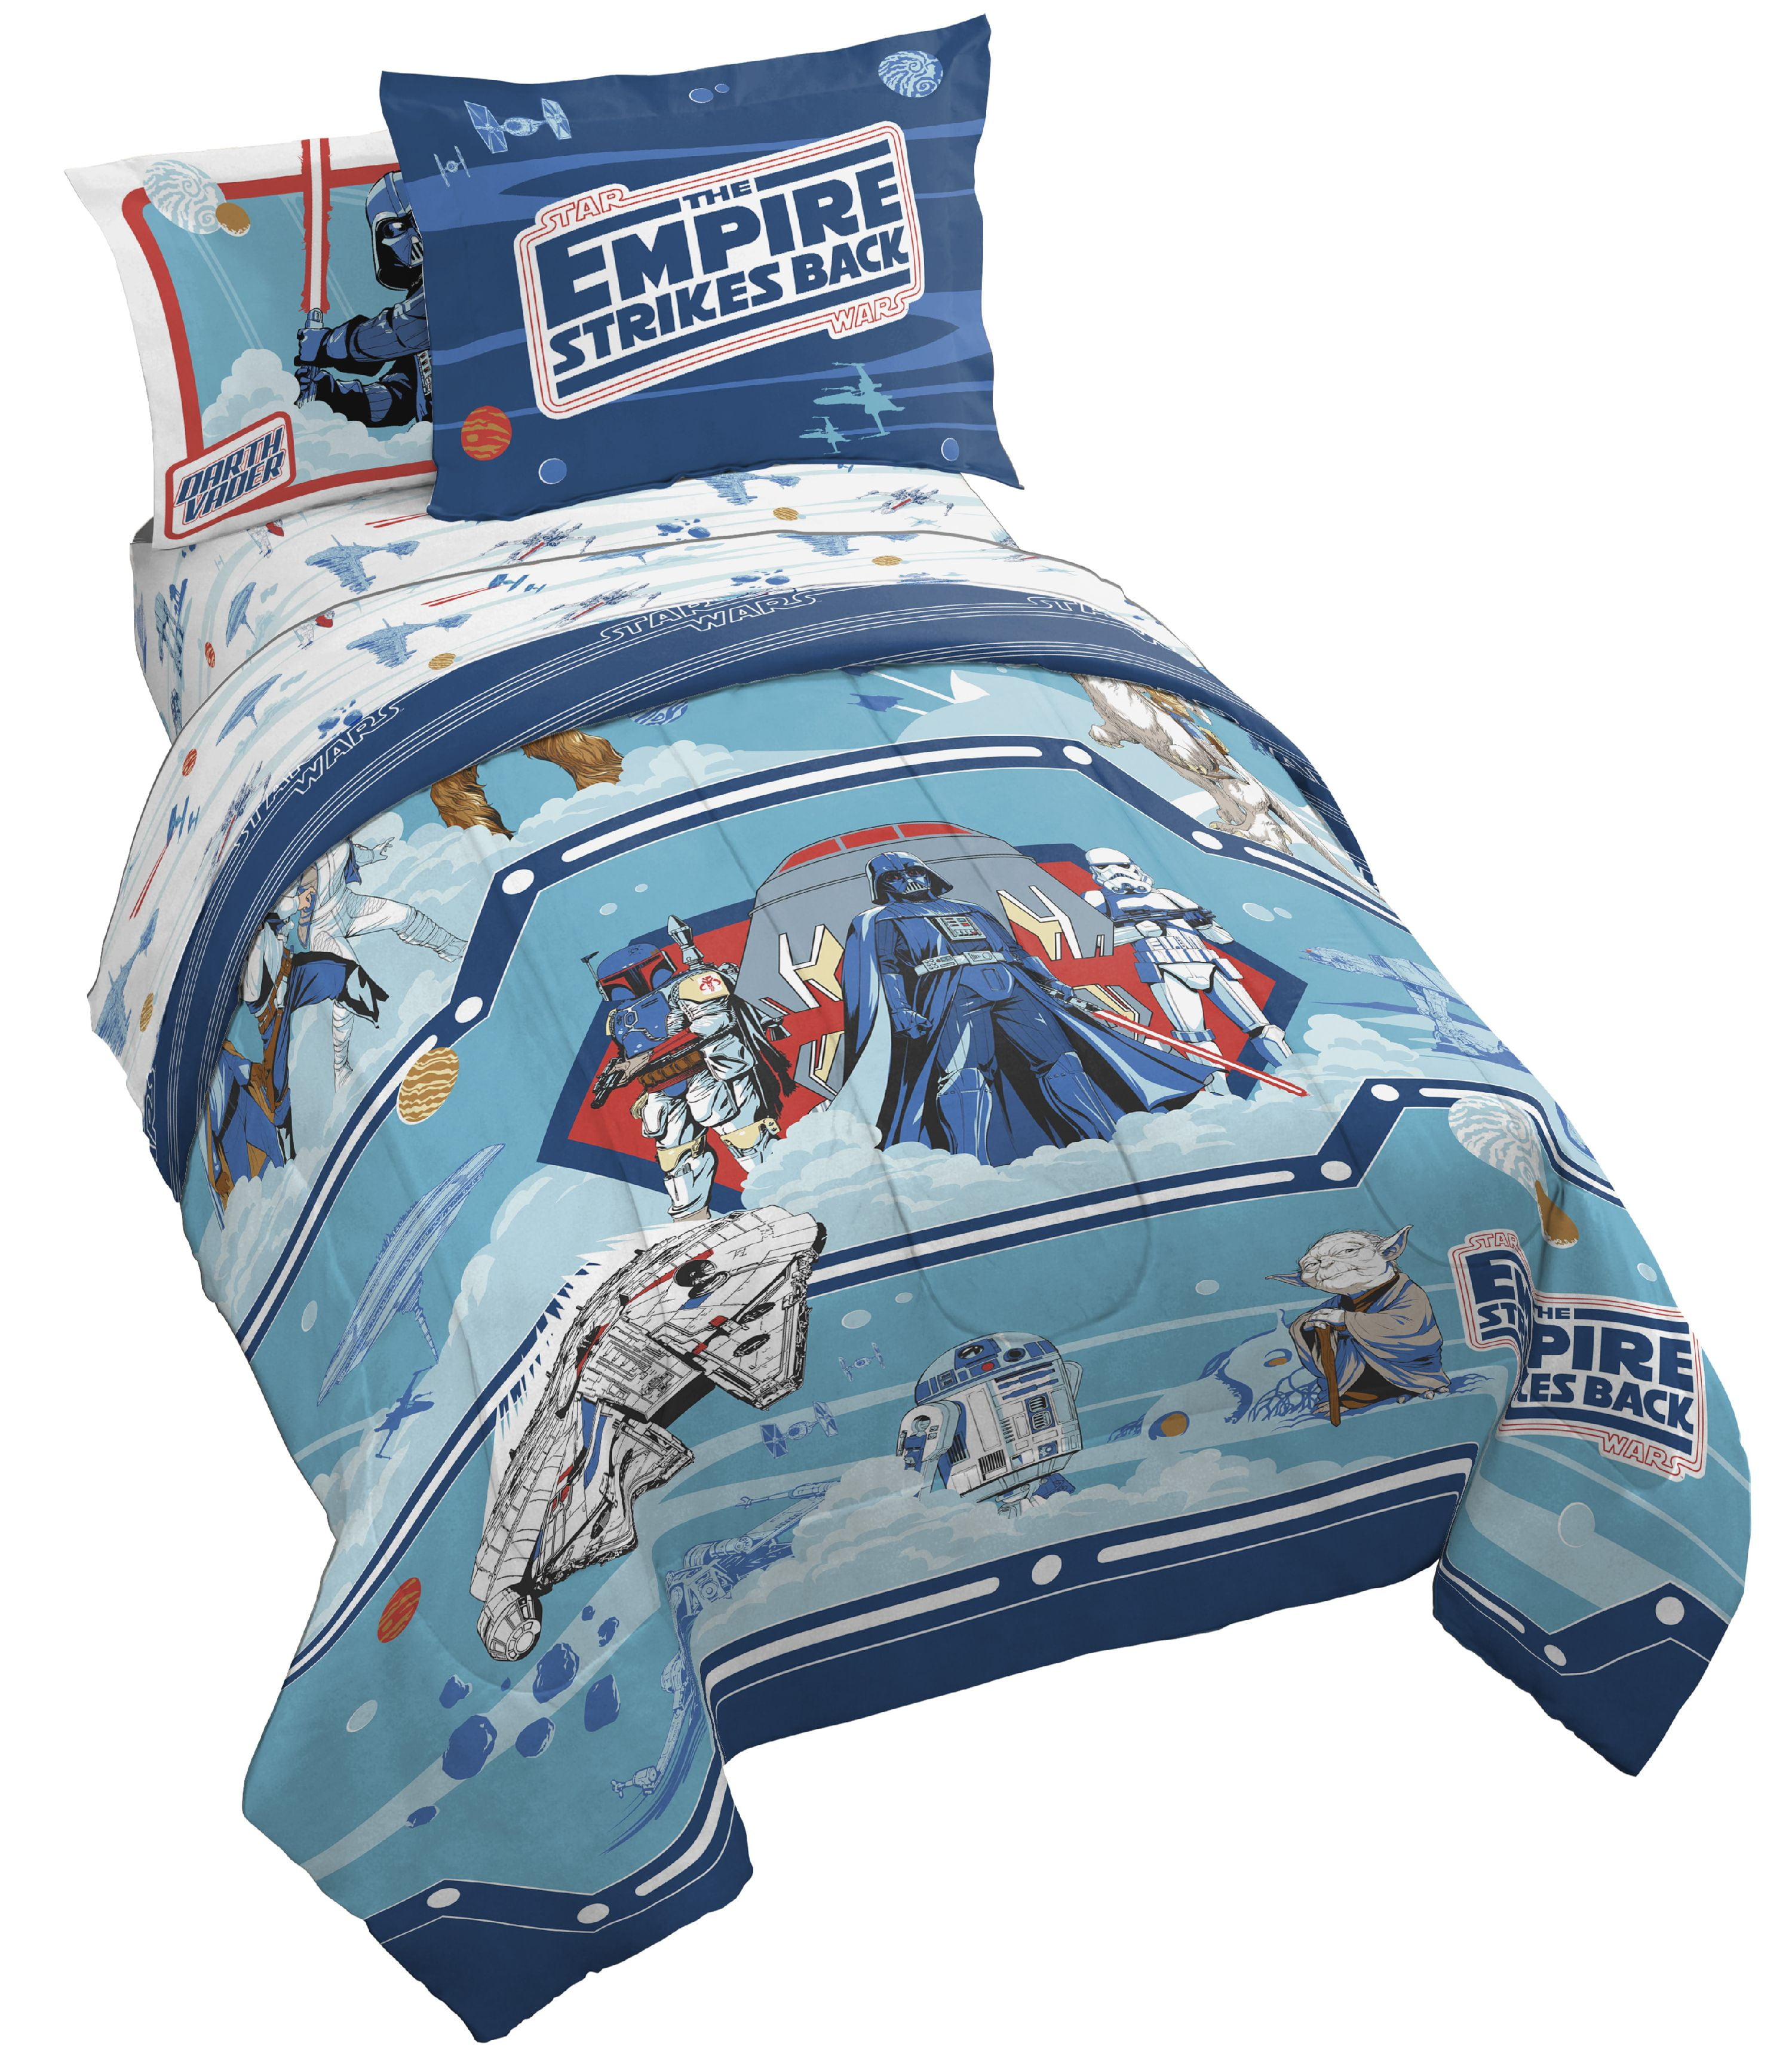 Disney Star Wars Classic Twin Comforter 64 X 86 Yoda Darth Vader Boba Fett for sale online 